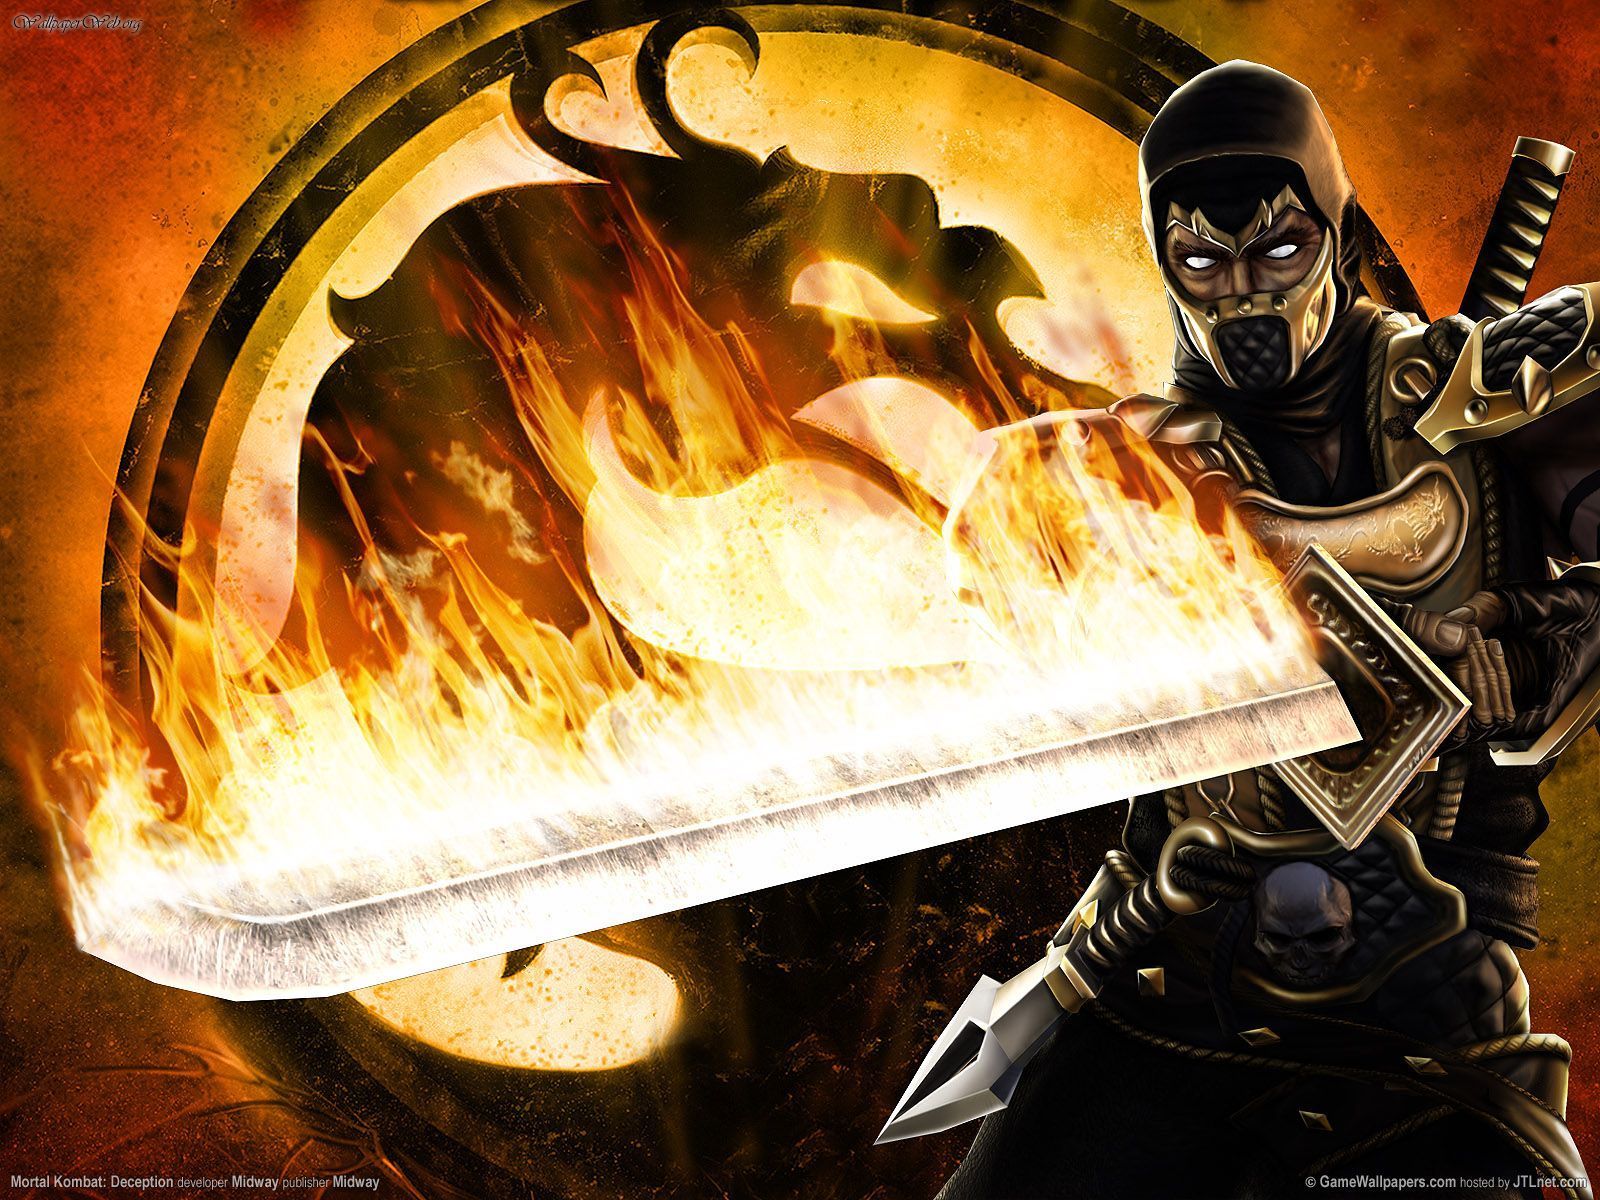 Games: Mortal Kombat: Deception, picture nr. 30011